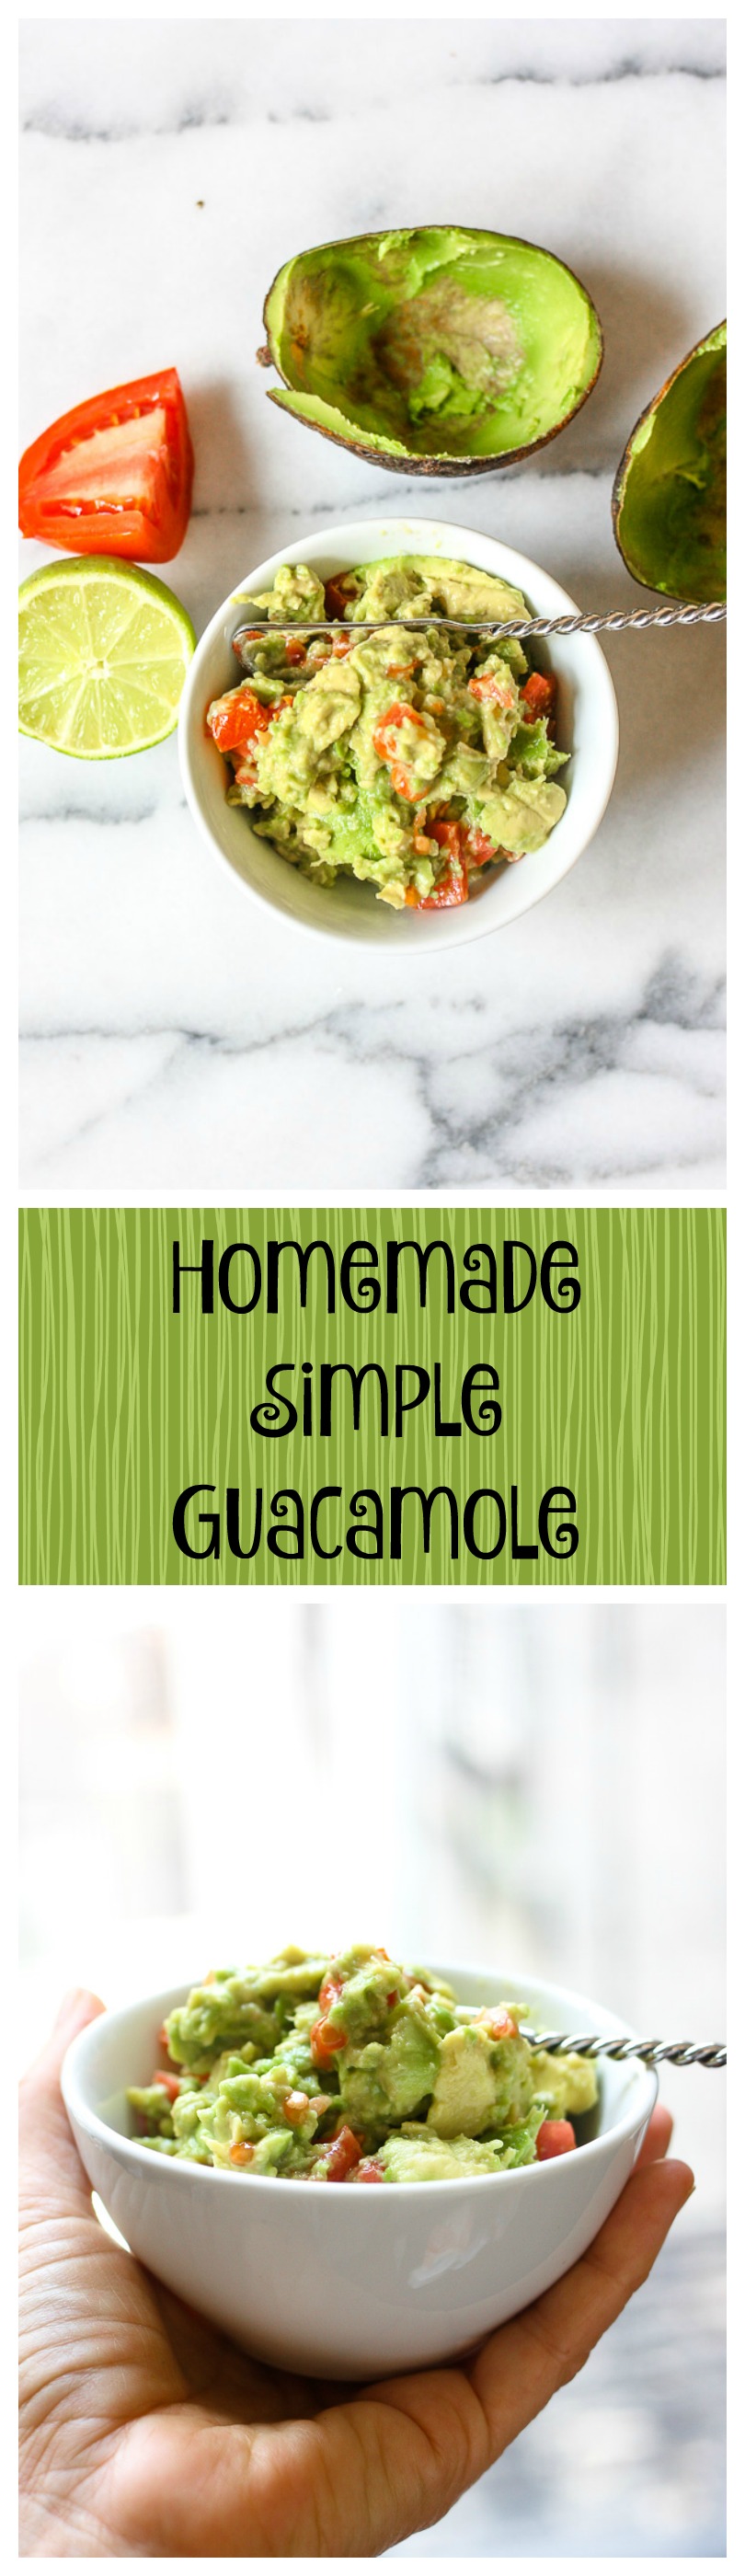 homemade simple guacamole